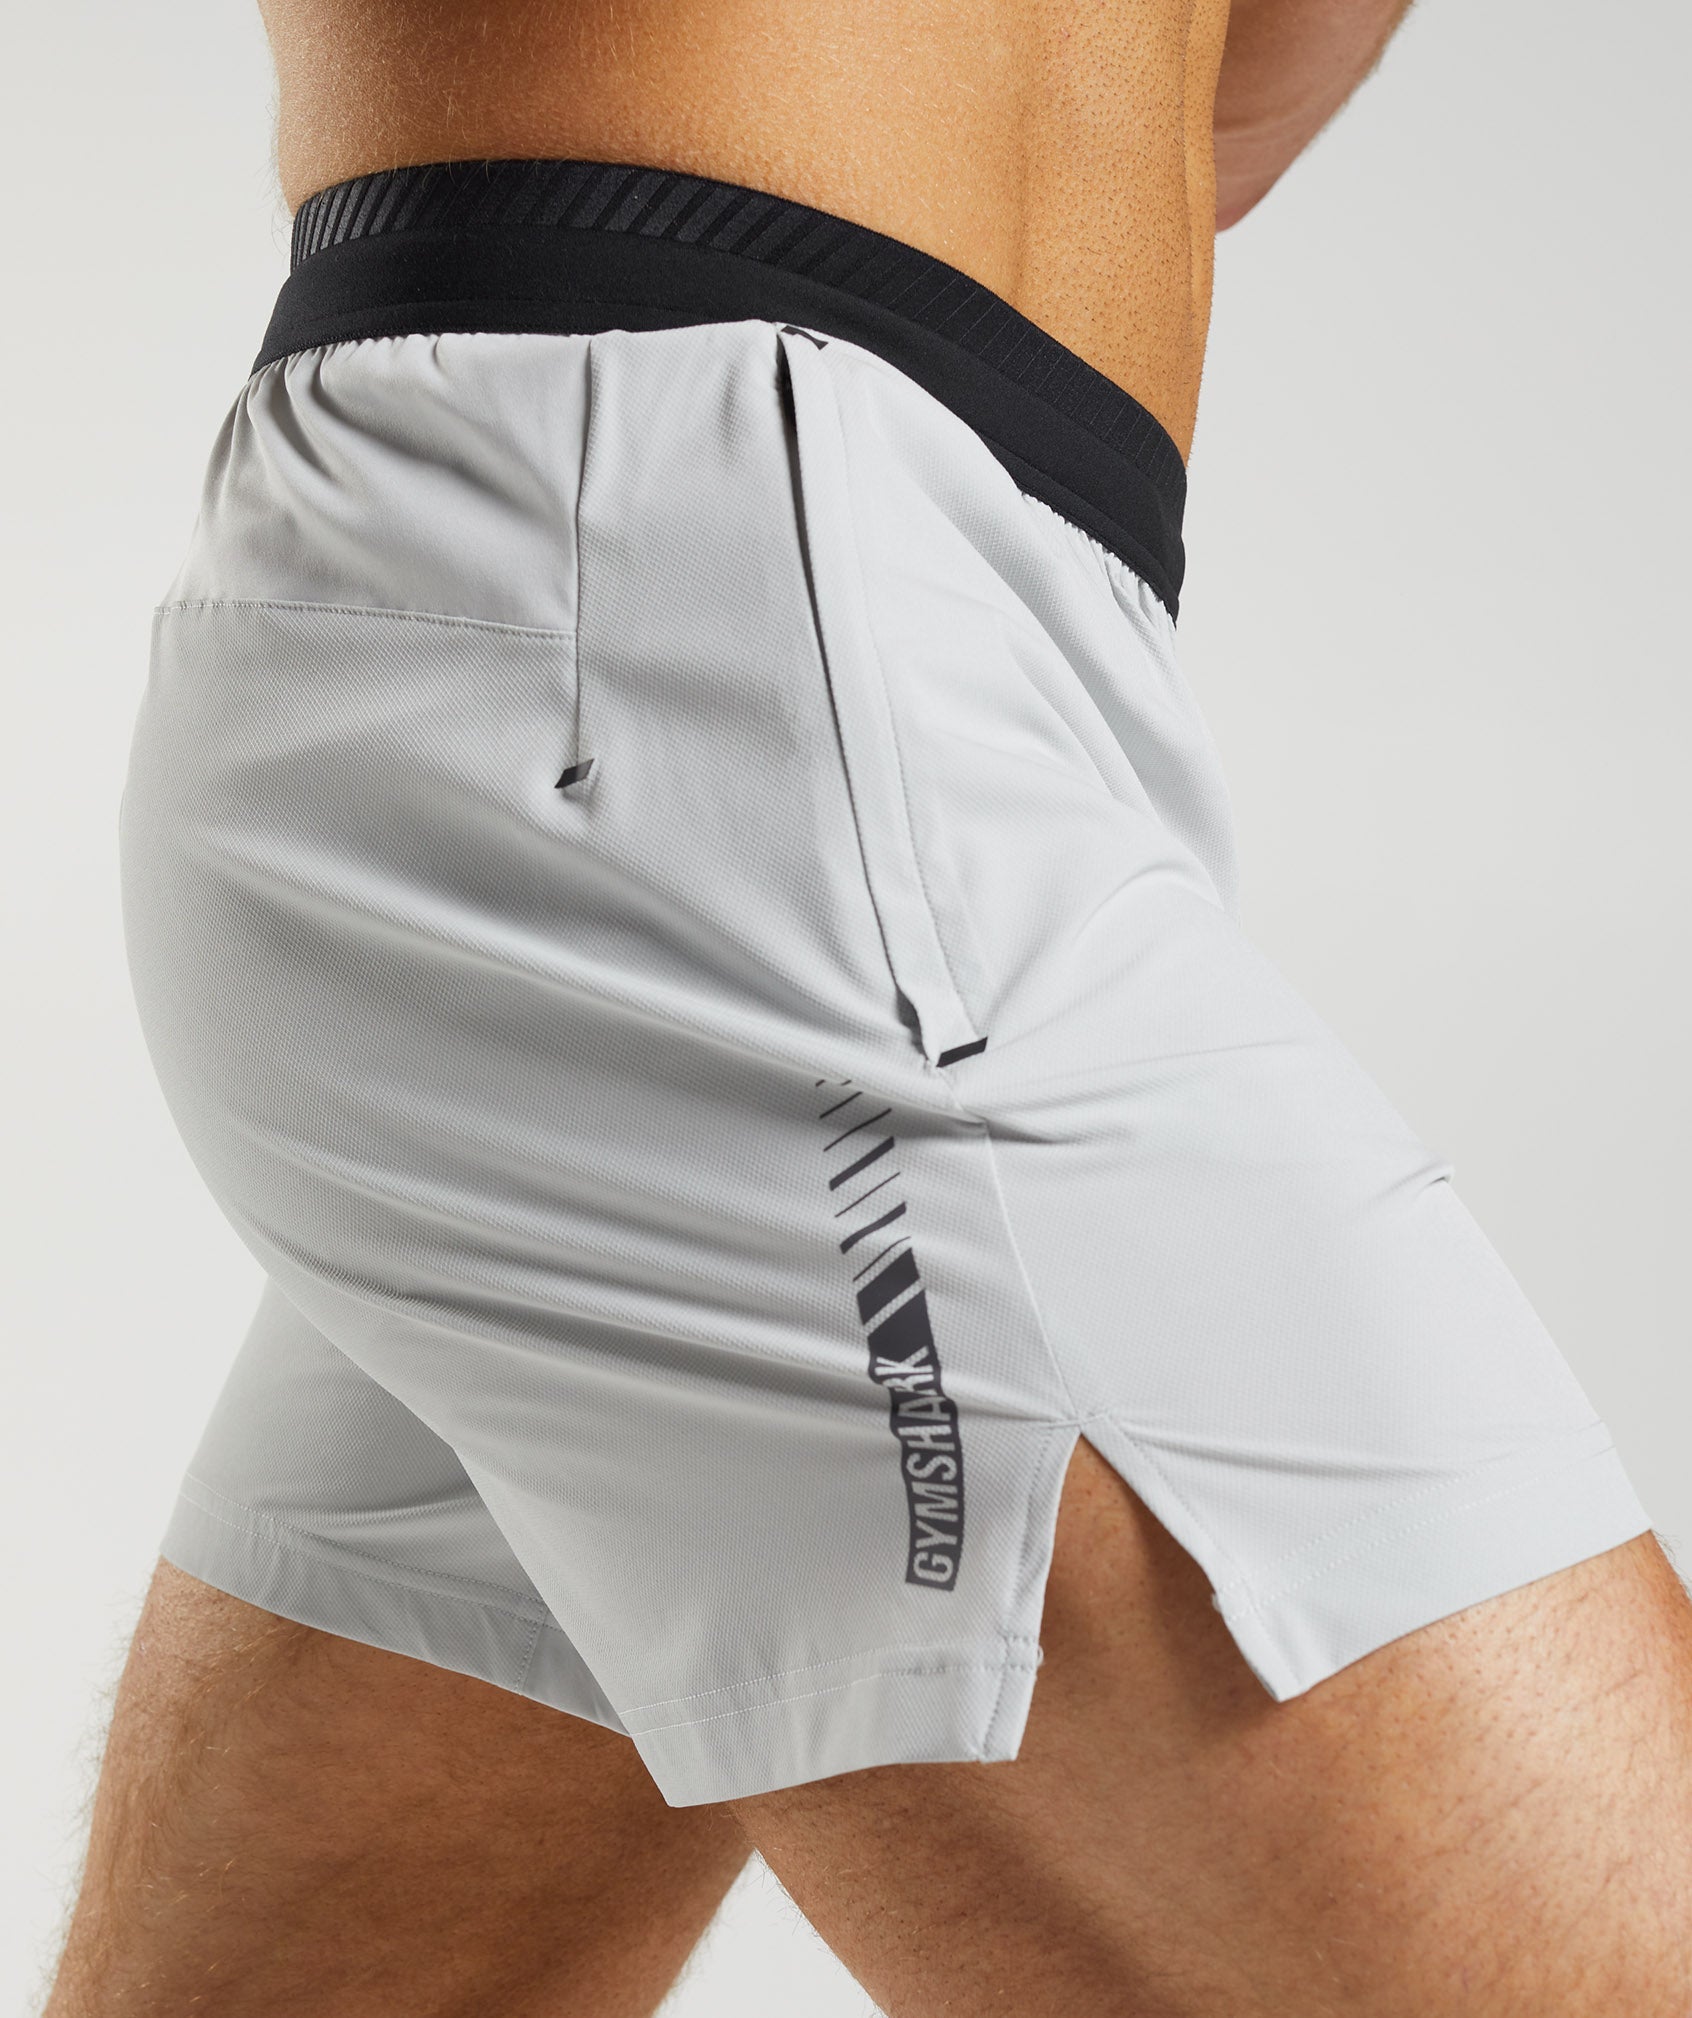 Apex 5" Hybrid Shorts in Light Grey - view 5